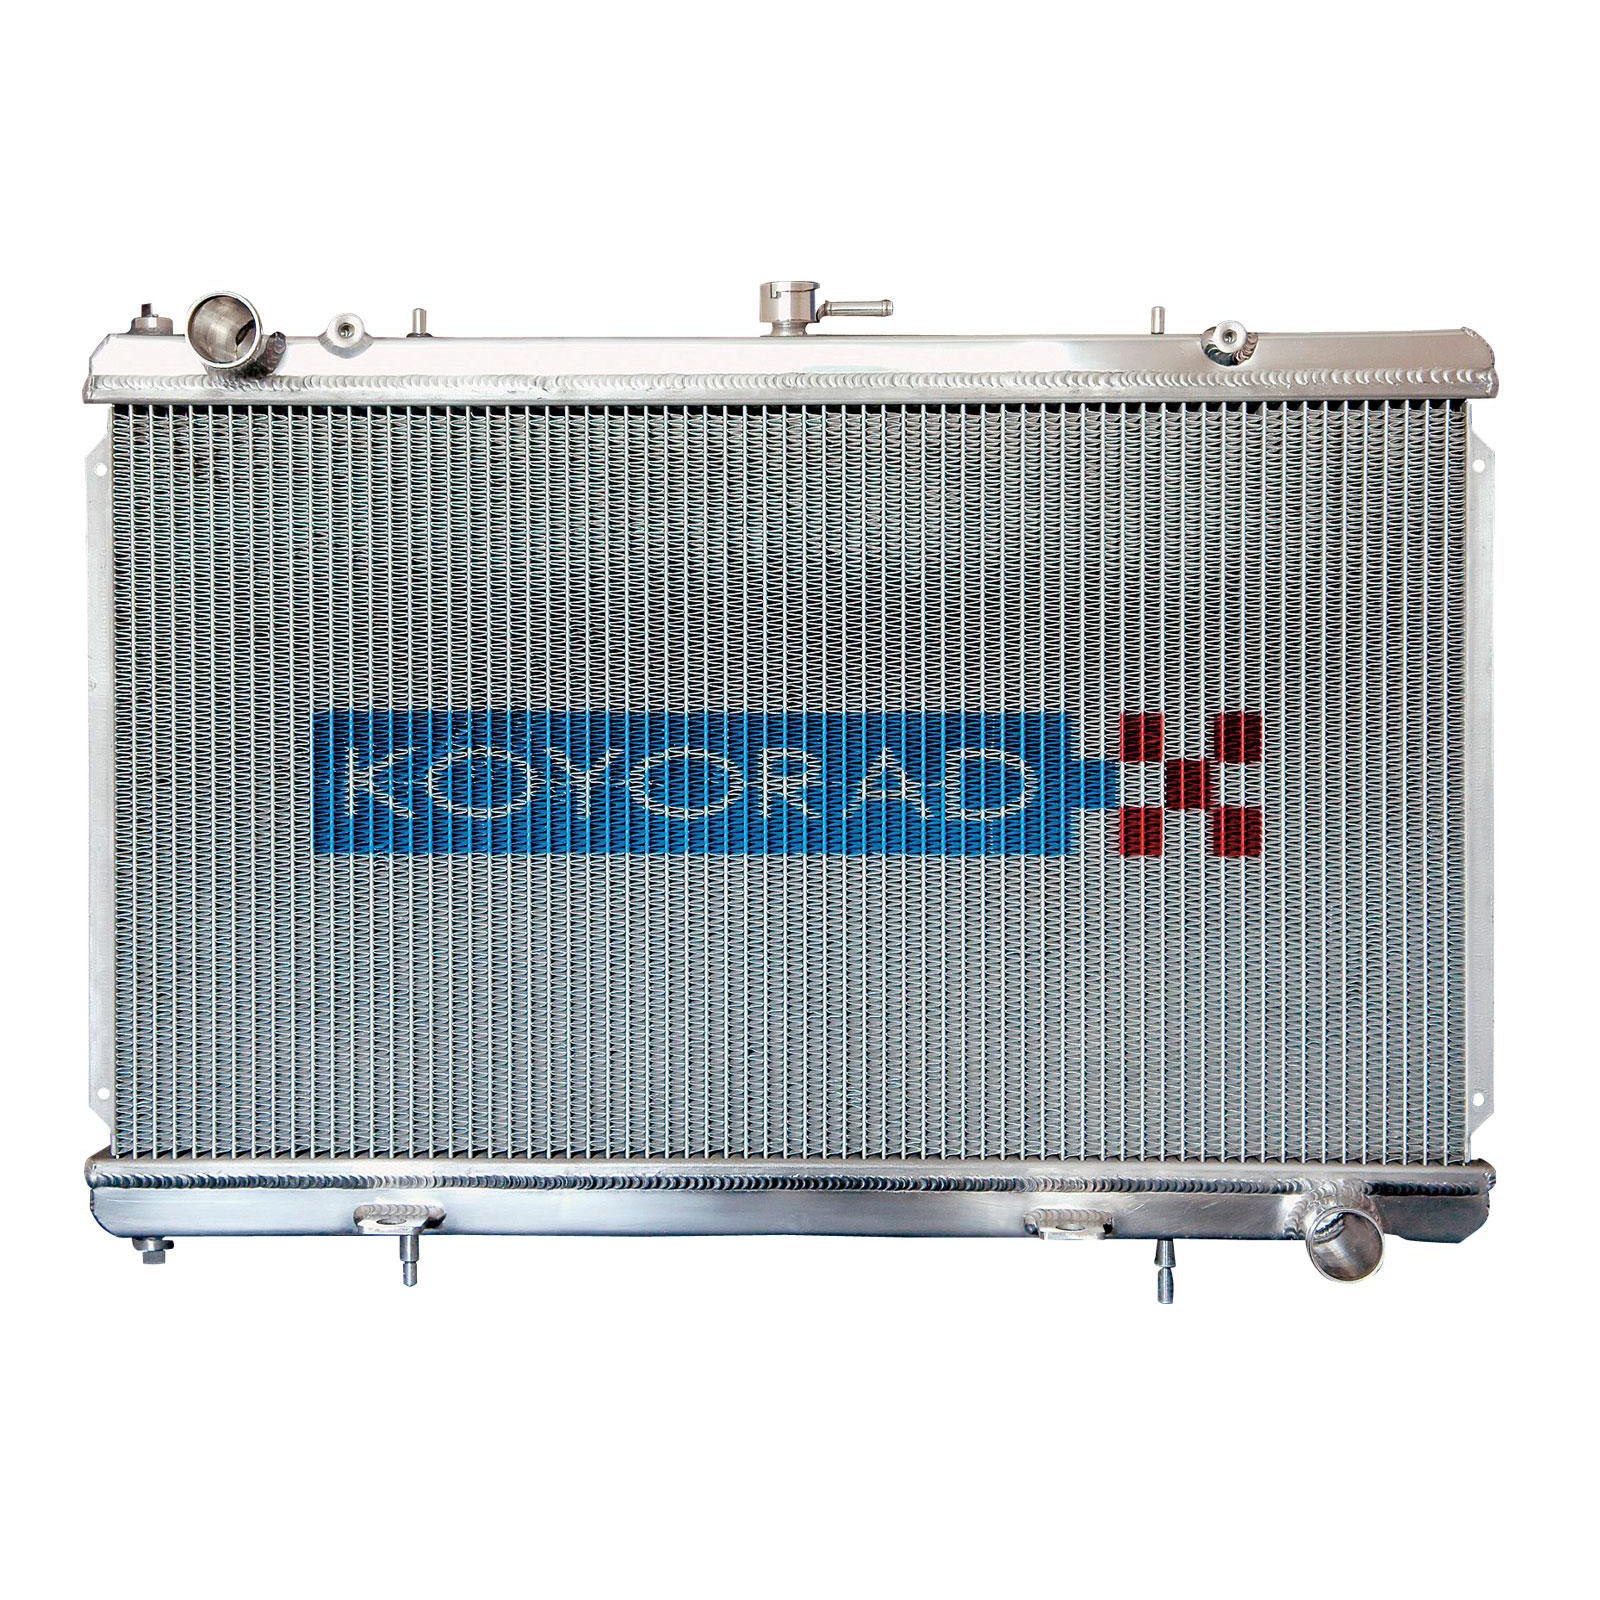 Koyo Aluminum Radiator 2003-2007 WRX and STI